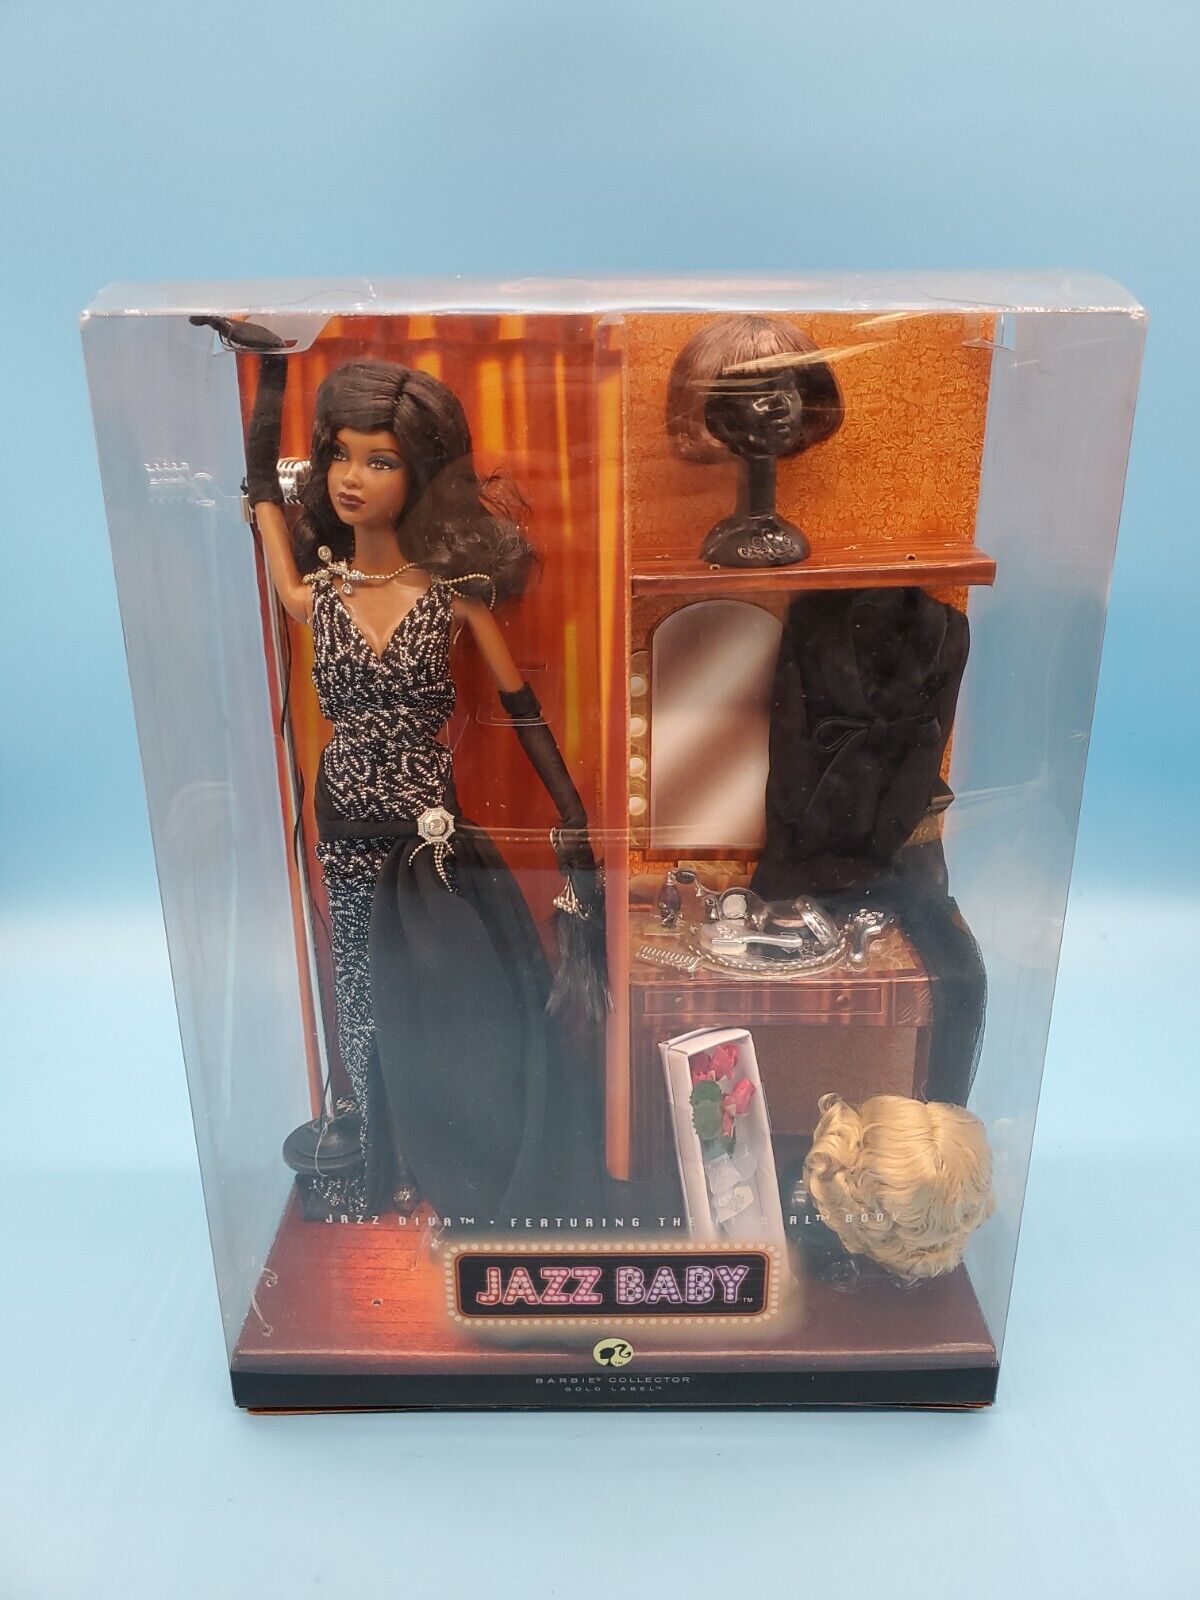 Jazz Diva 2007 Barbie Doll Gold Label Mattel New Loose Items Inside Package